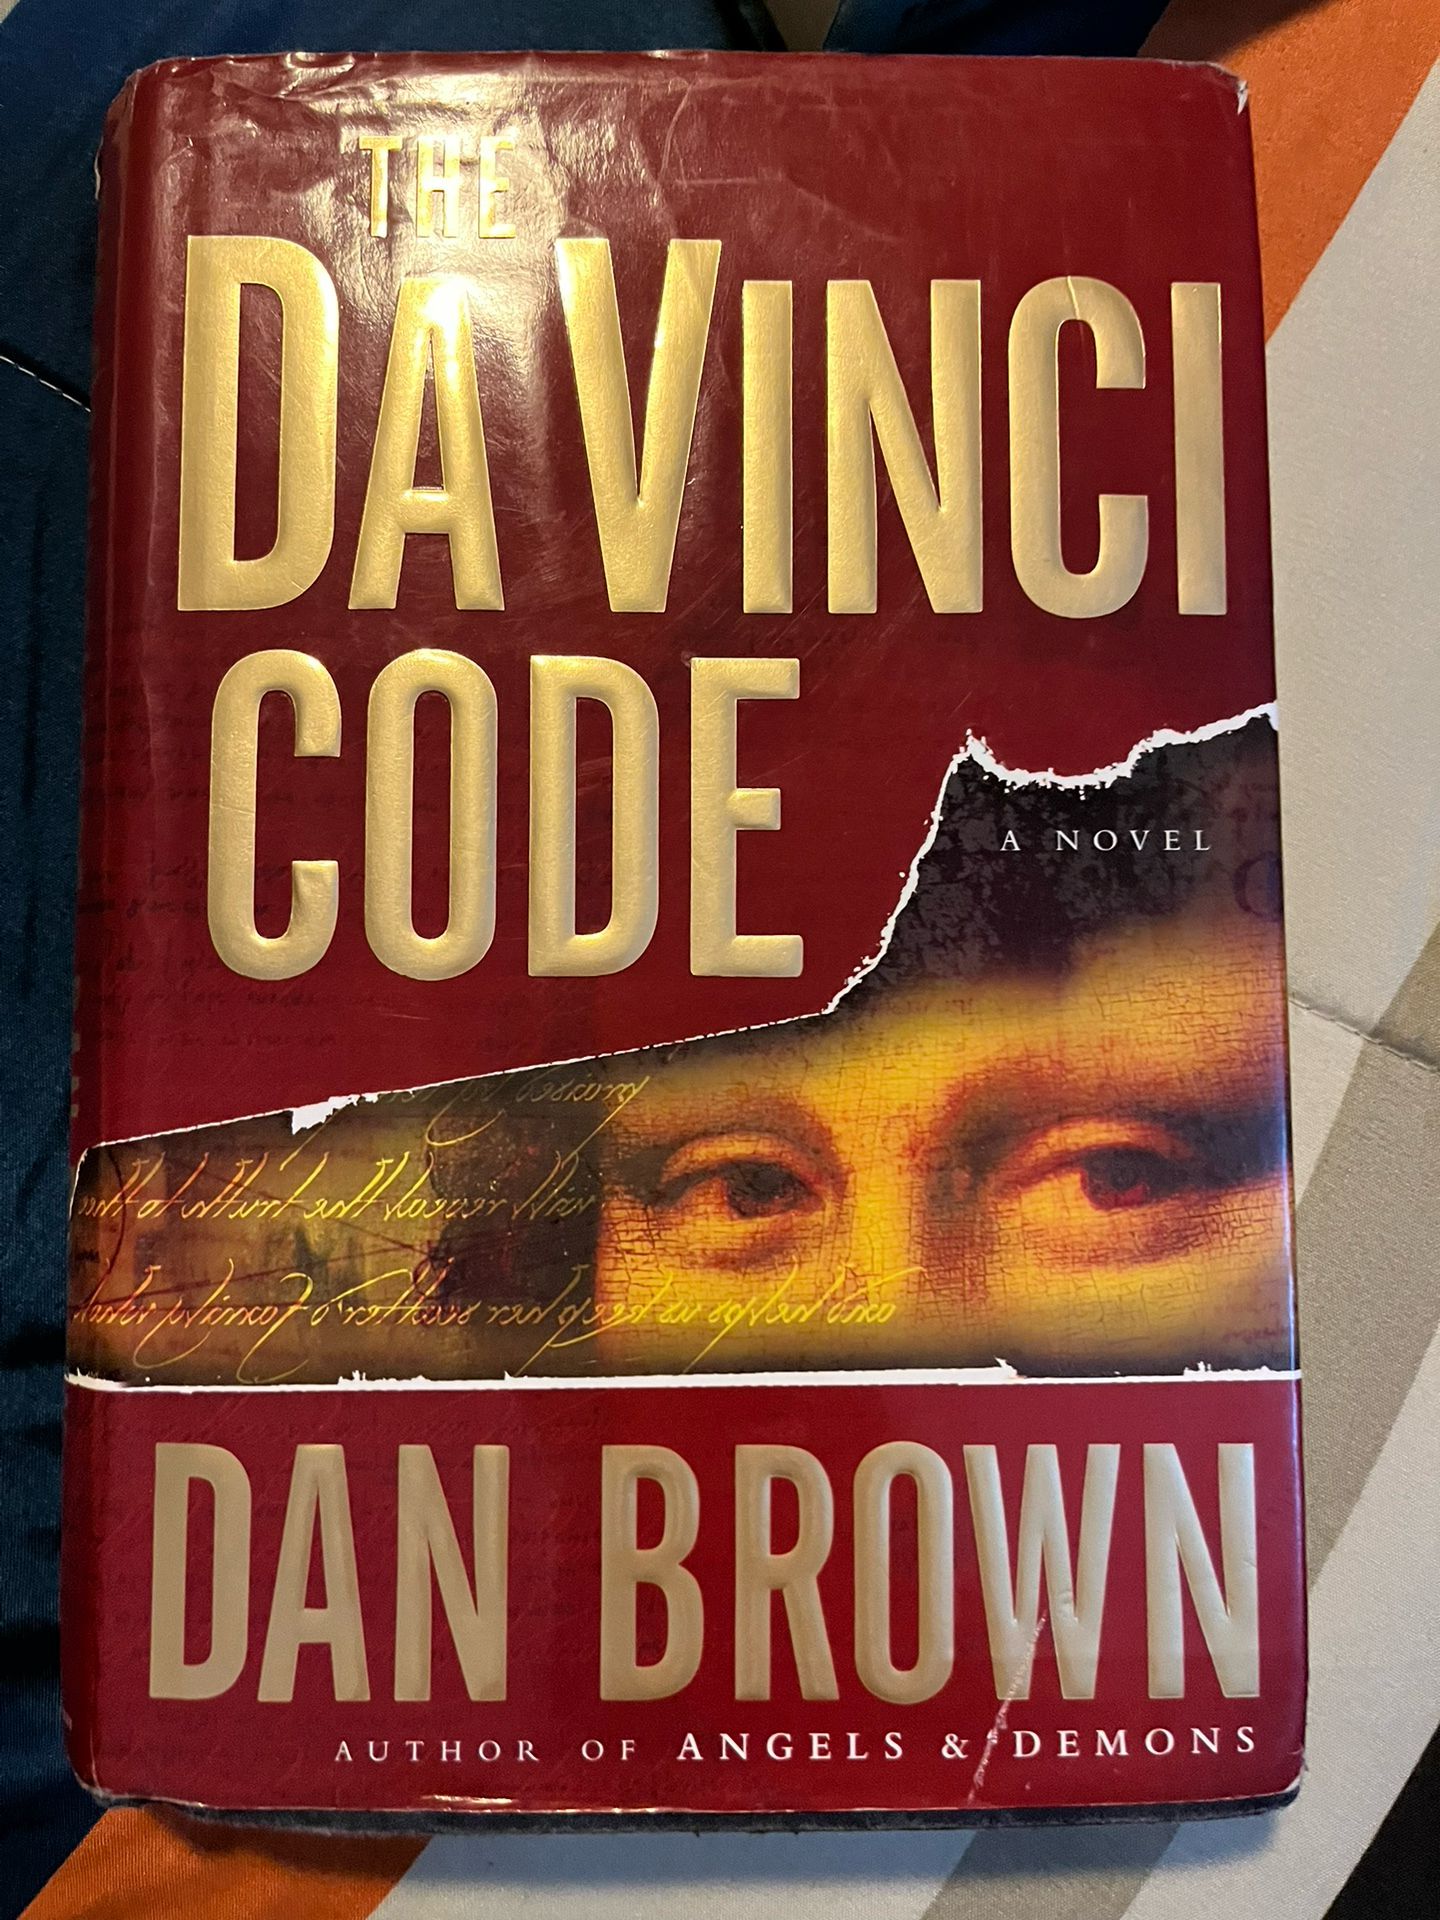 DaVinci Code book